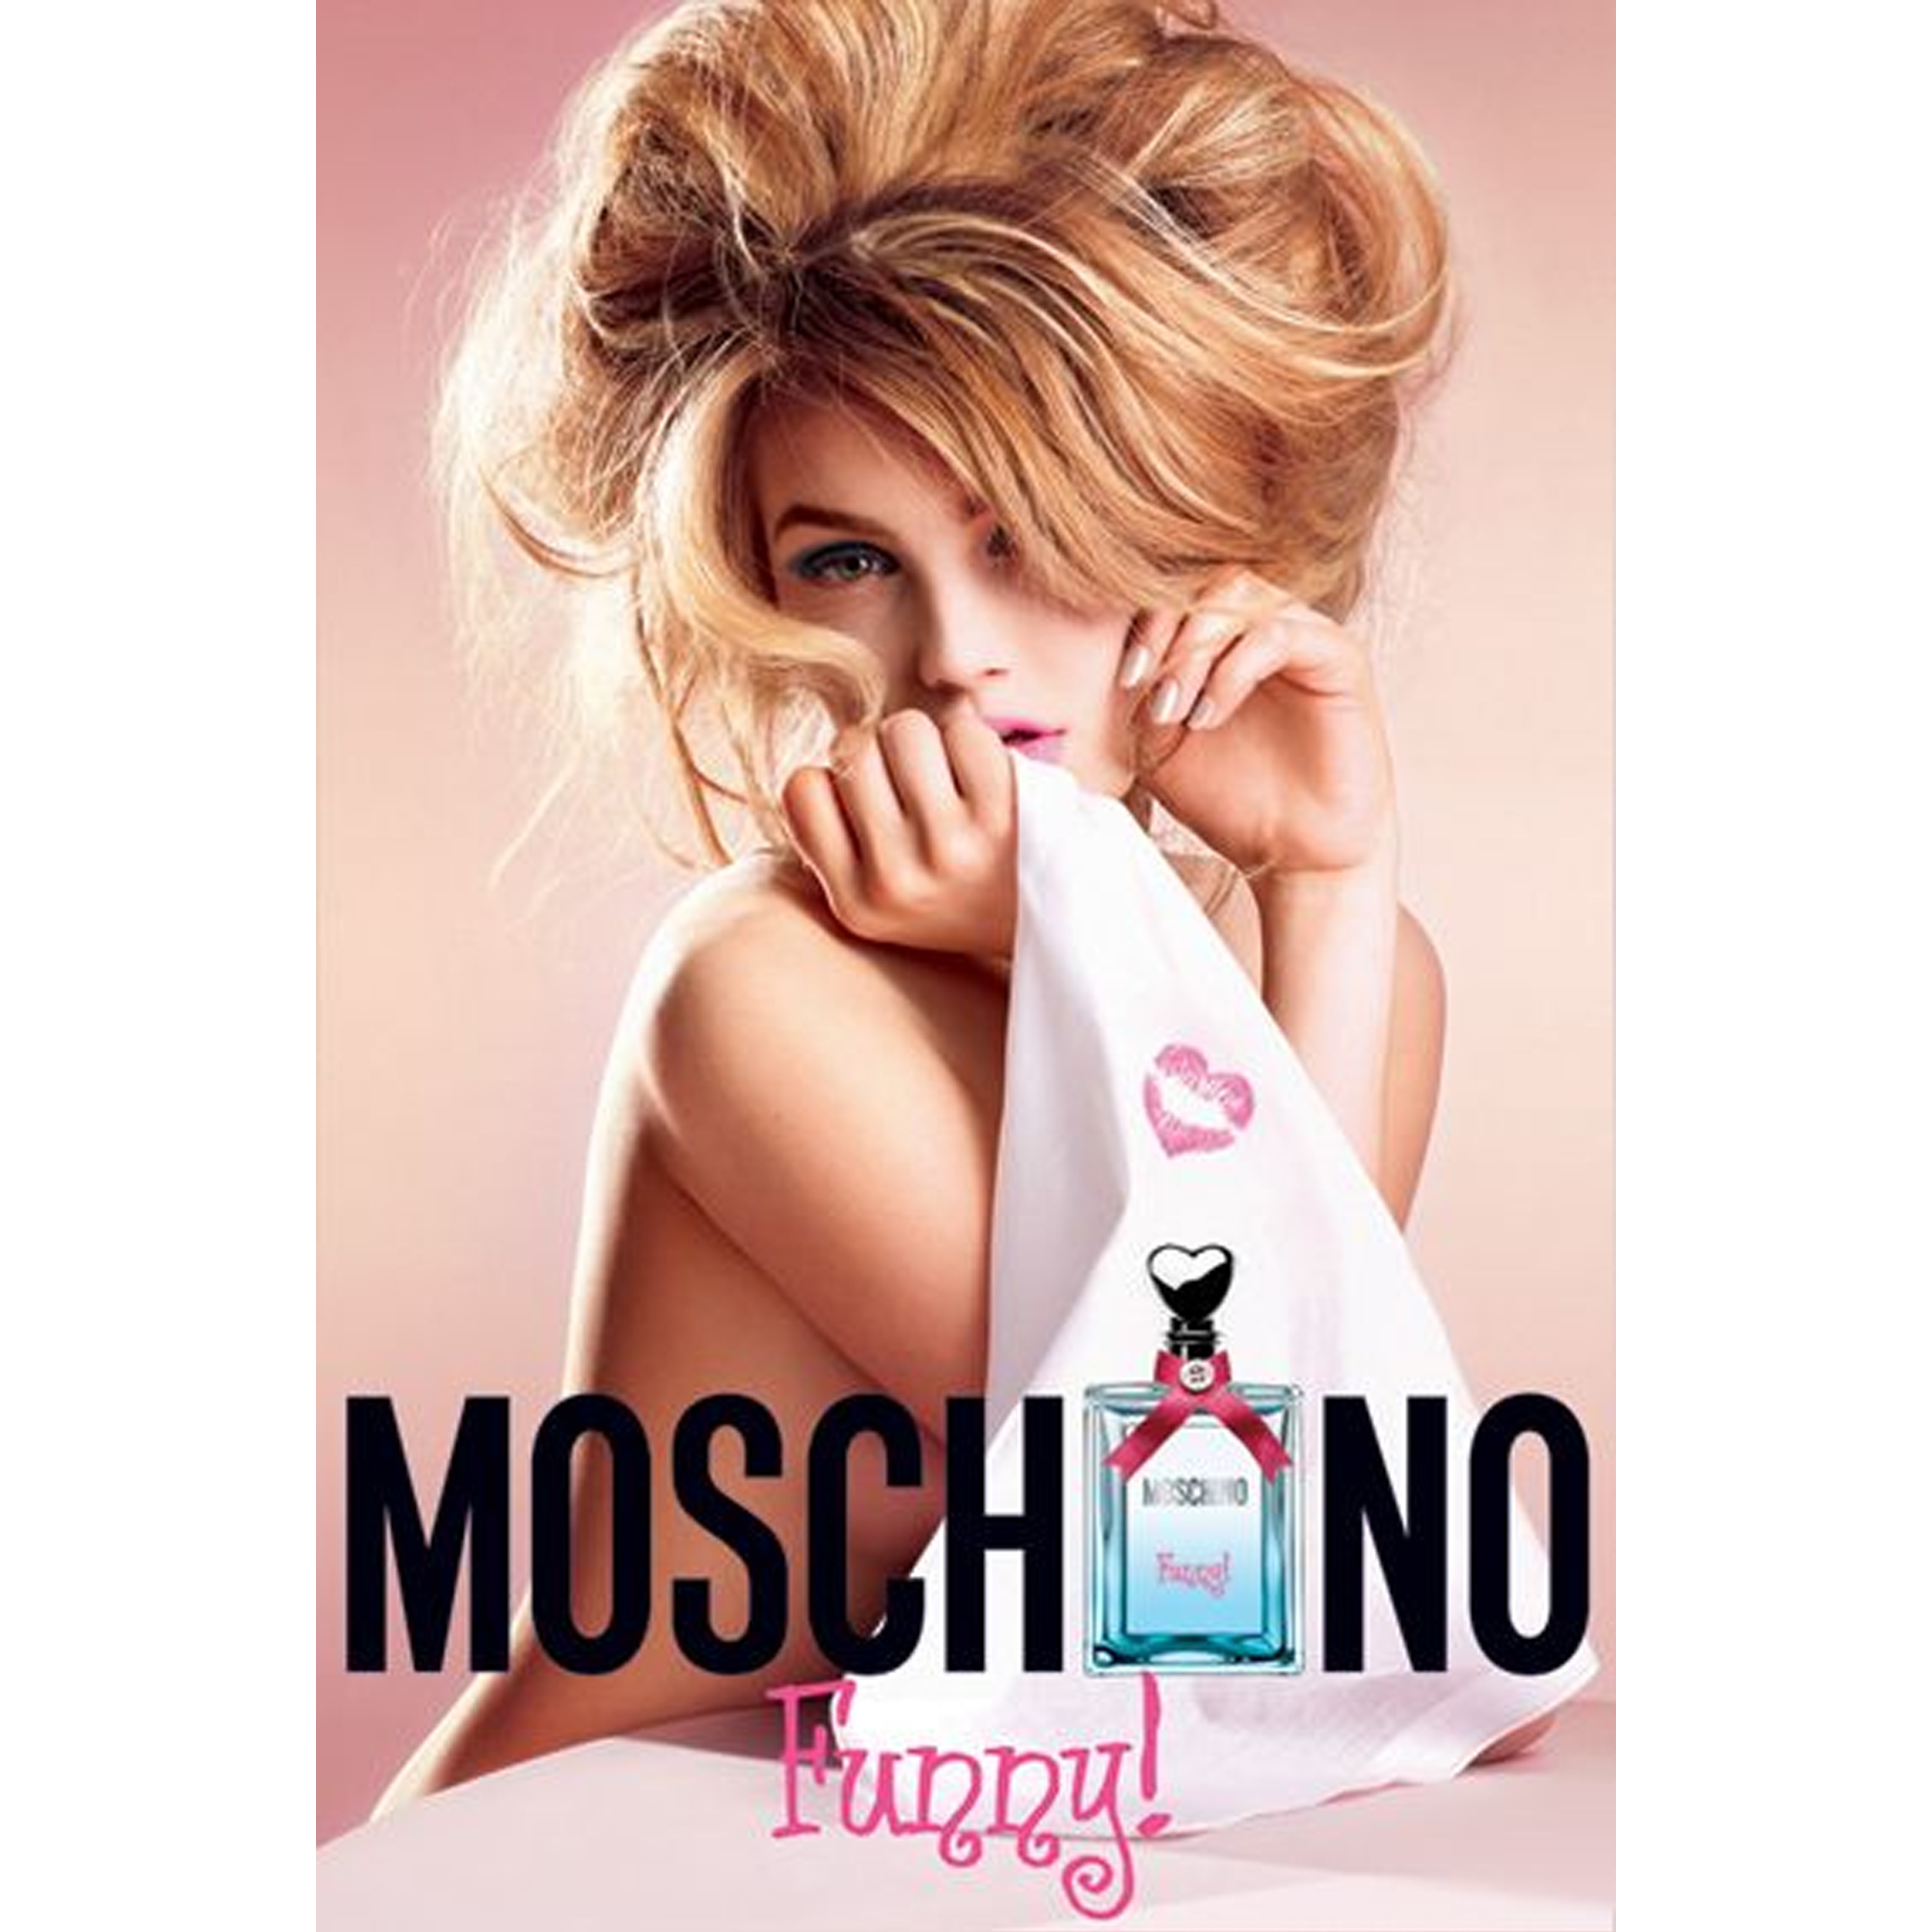 Moschino Funny (Replica Con Fragancia Importada)- Mujer 